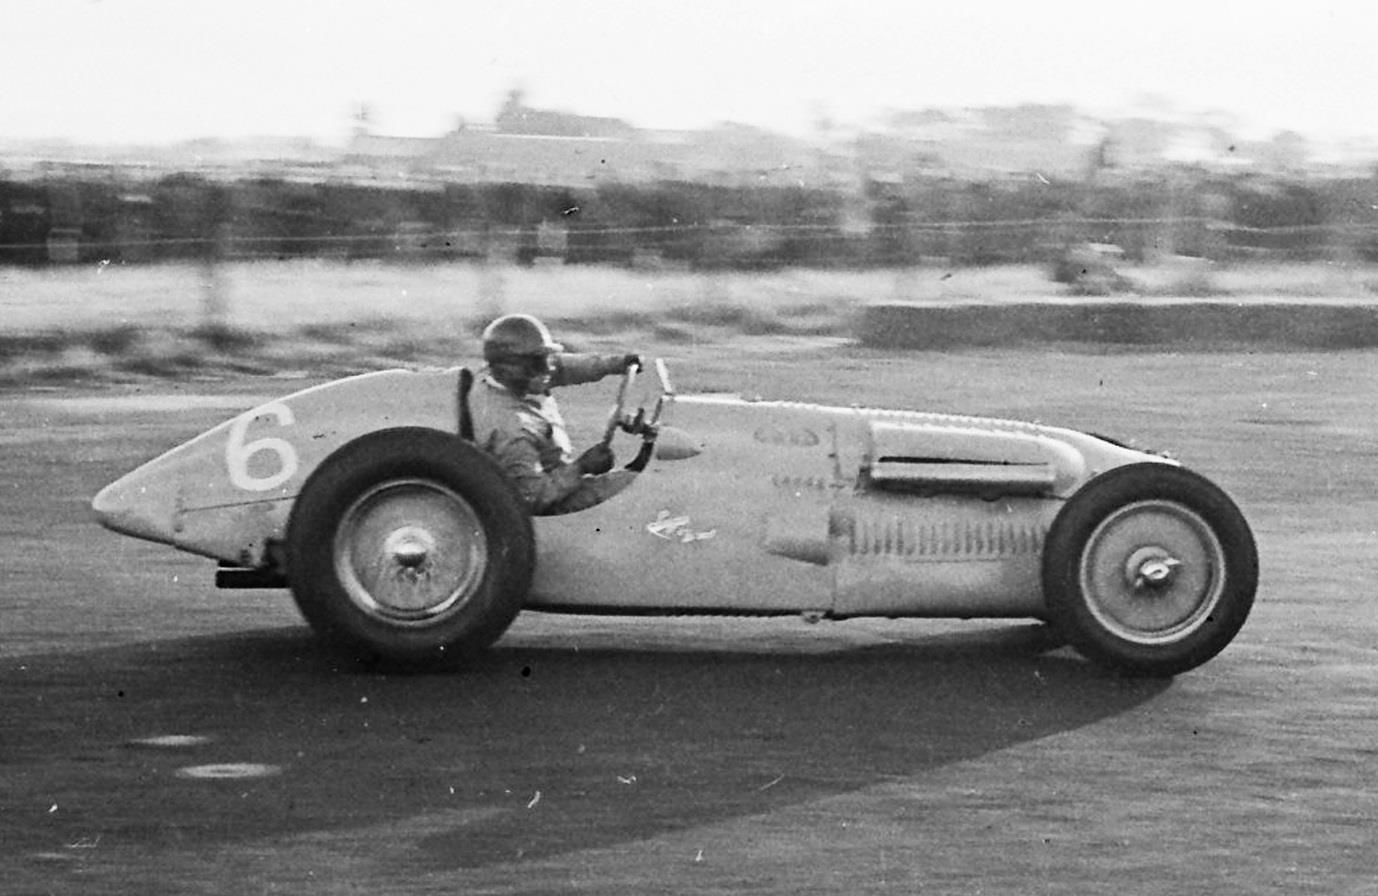 Yves-Giraud-Cabantous at the wheel of his Talbot-Lago, Charterhall 1952